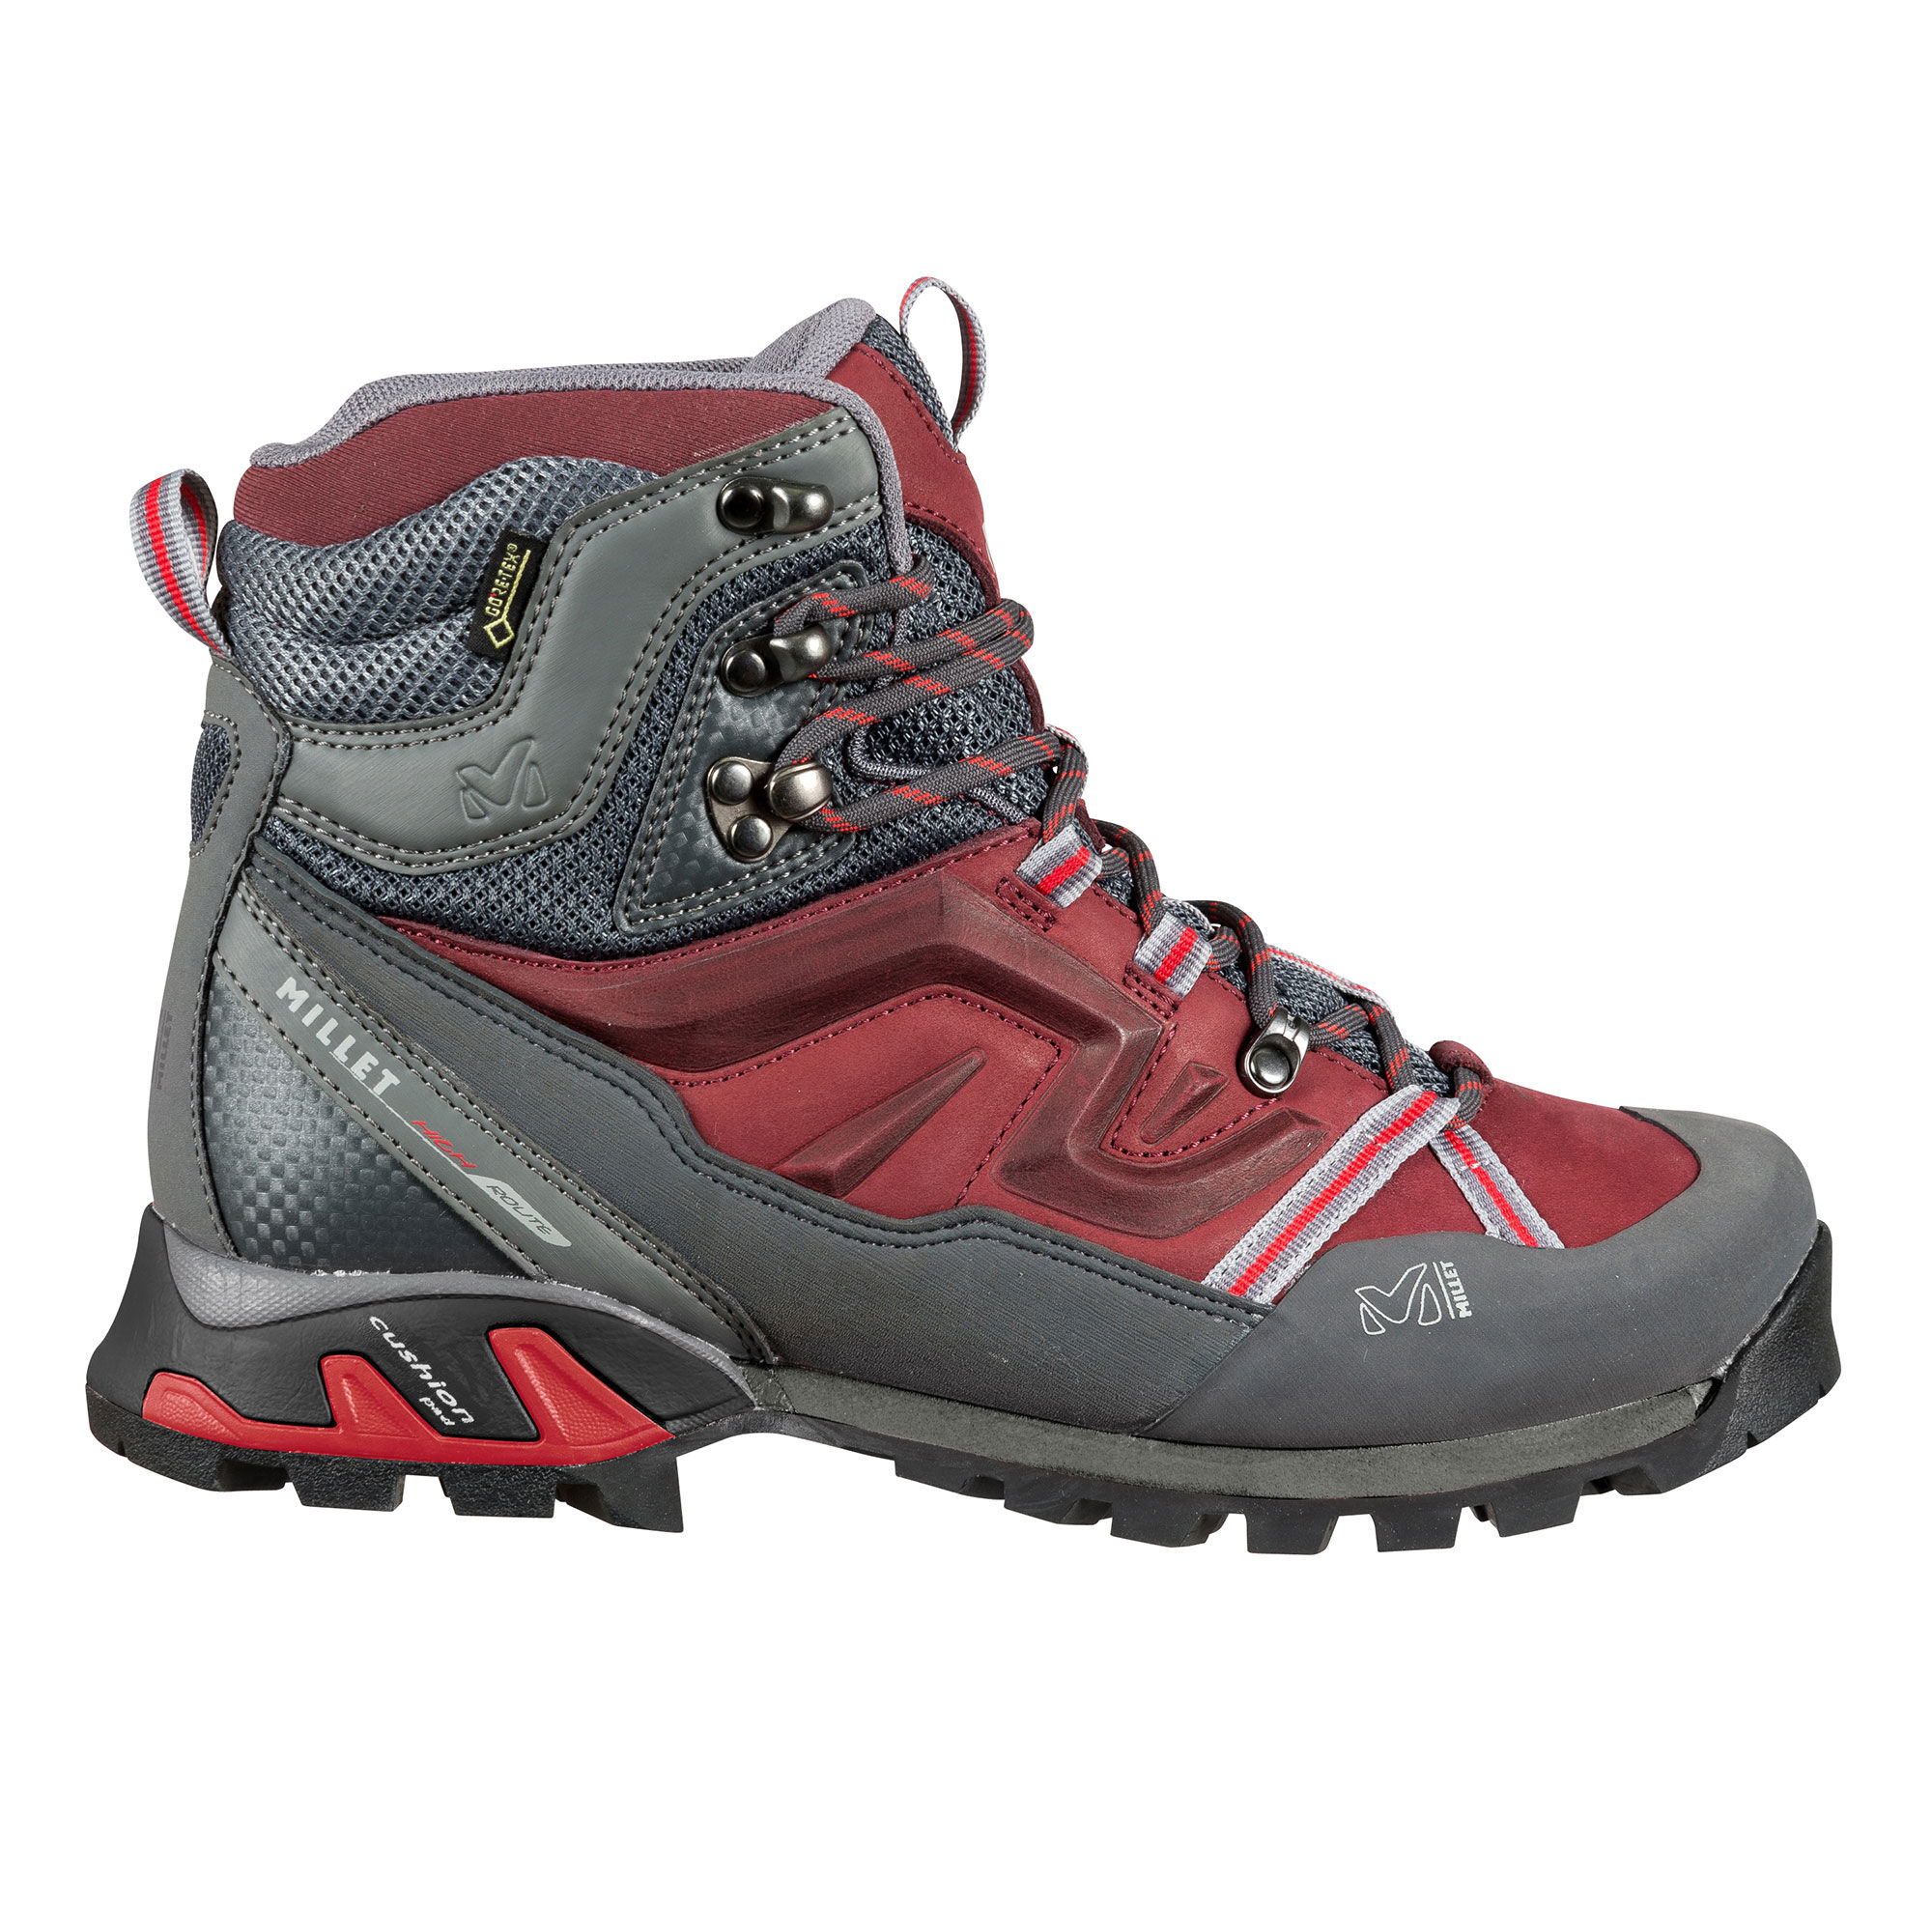 Millet - LD High Route GTX - Hiking Boots - Women's